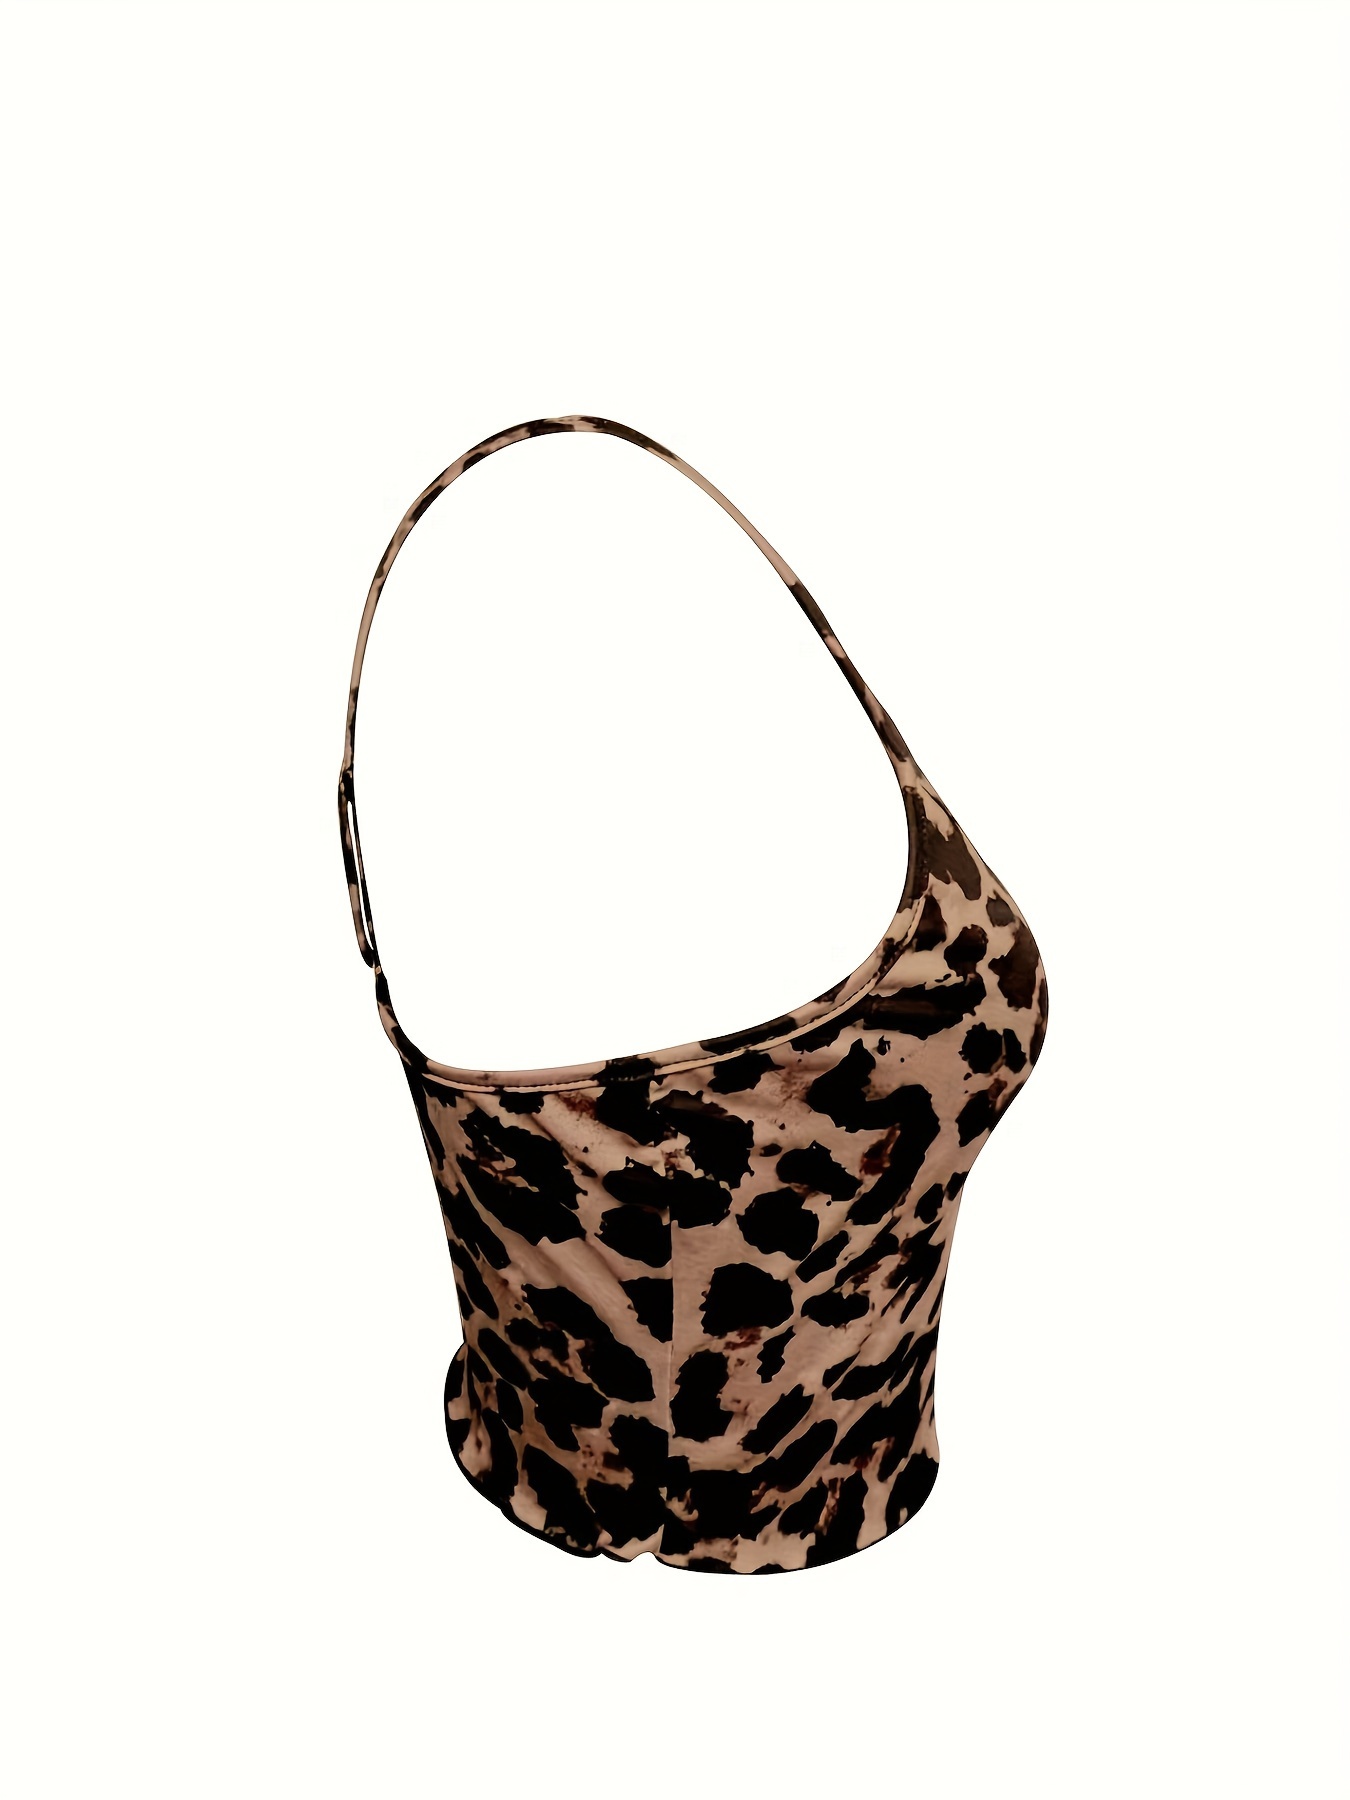 Tan Leopard Cami Top - Printed Top - Cowl Neck Top